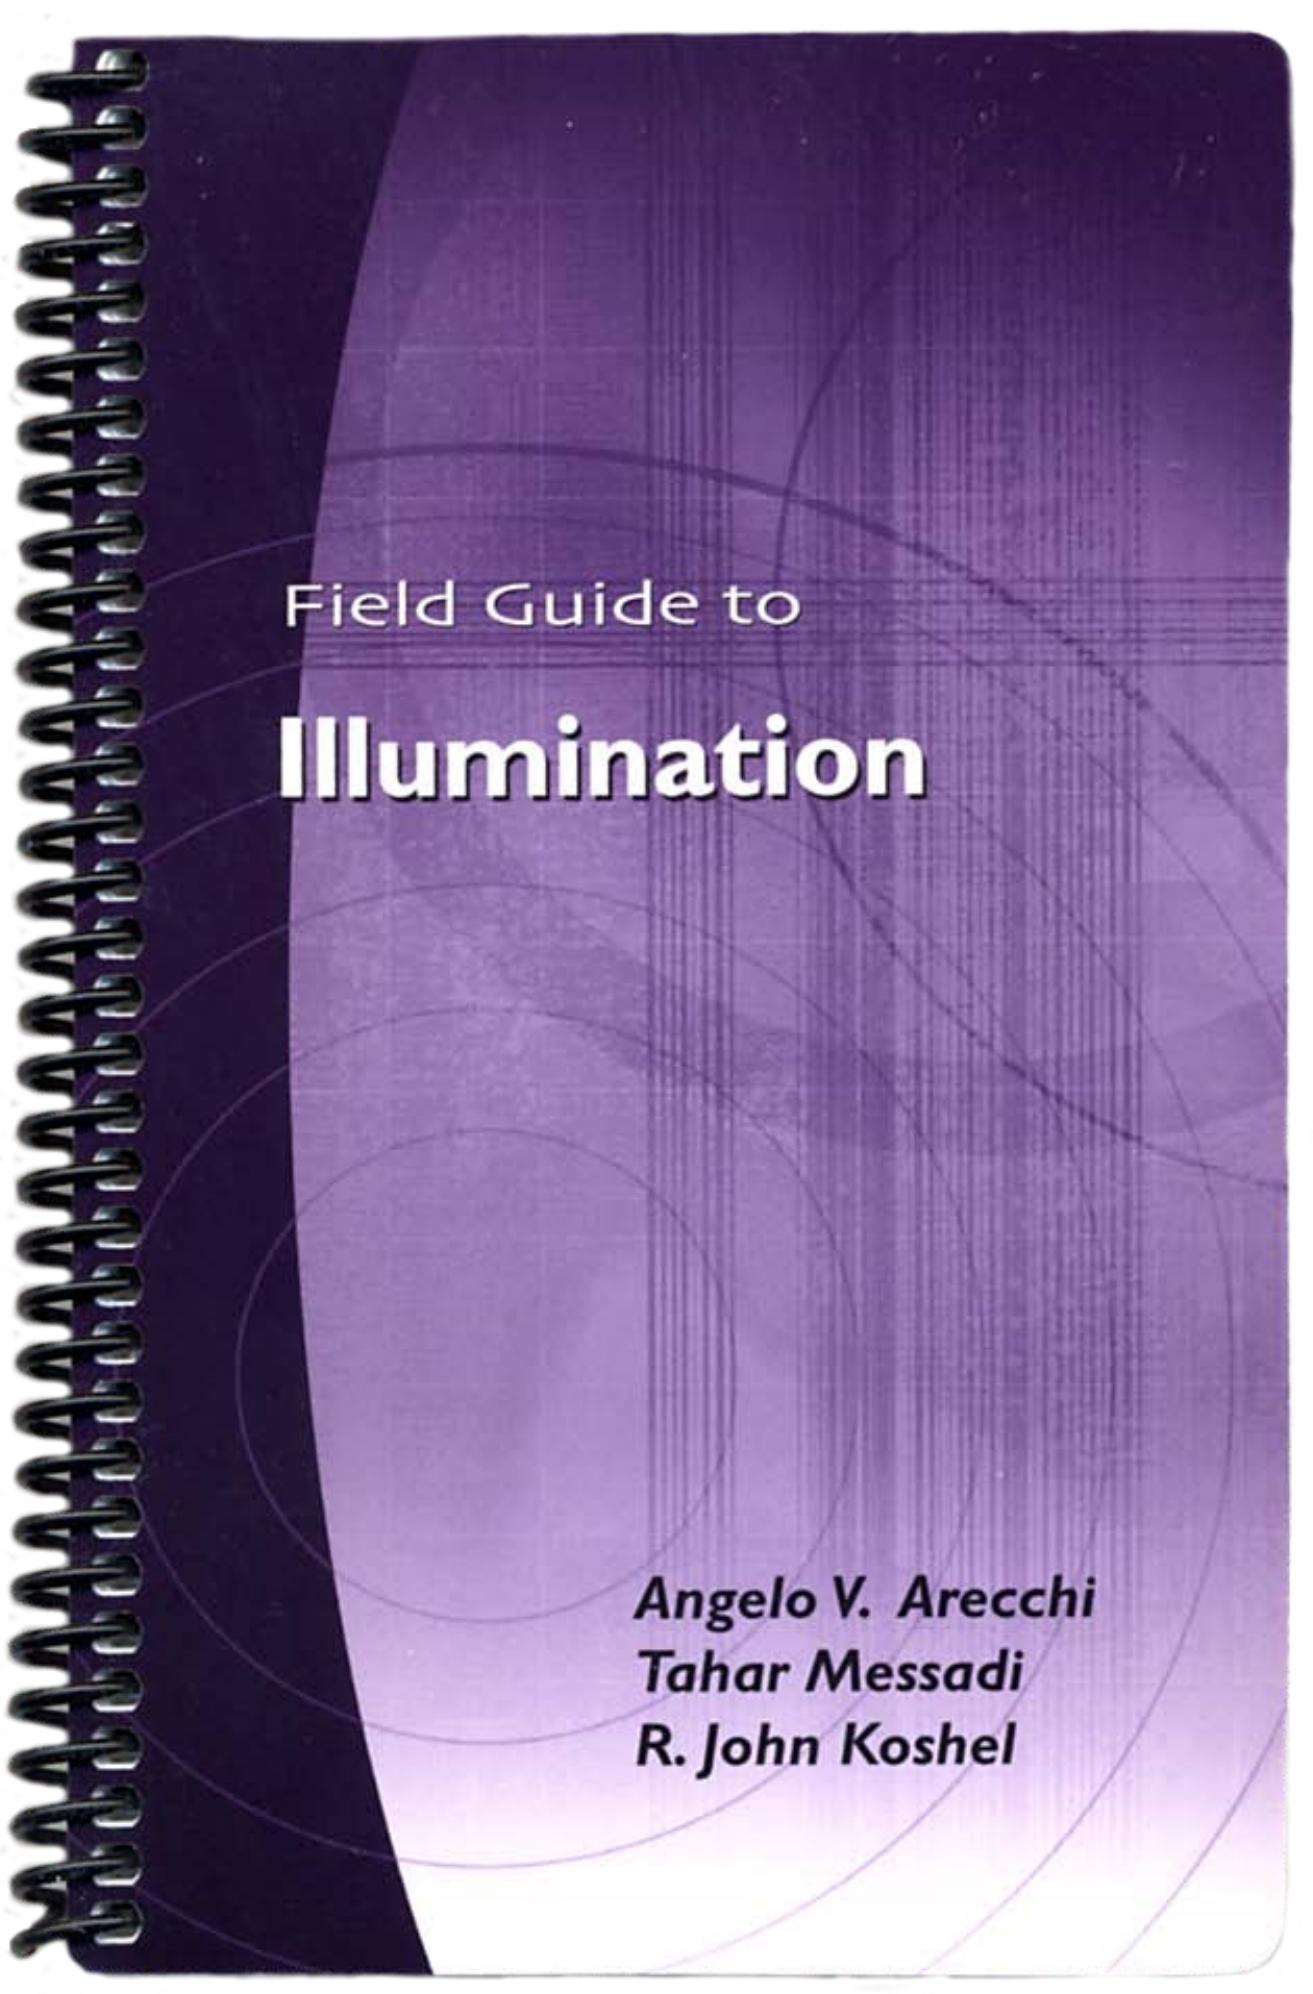 Field Guide to Illumination